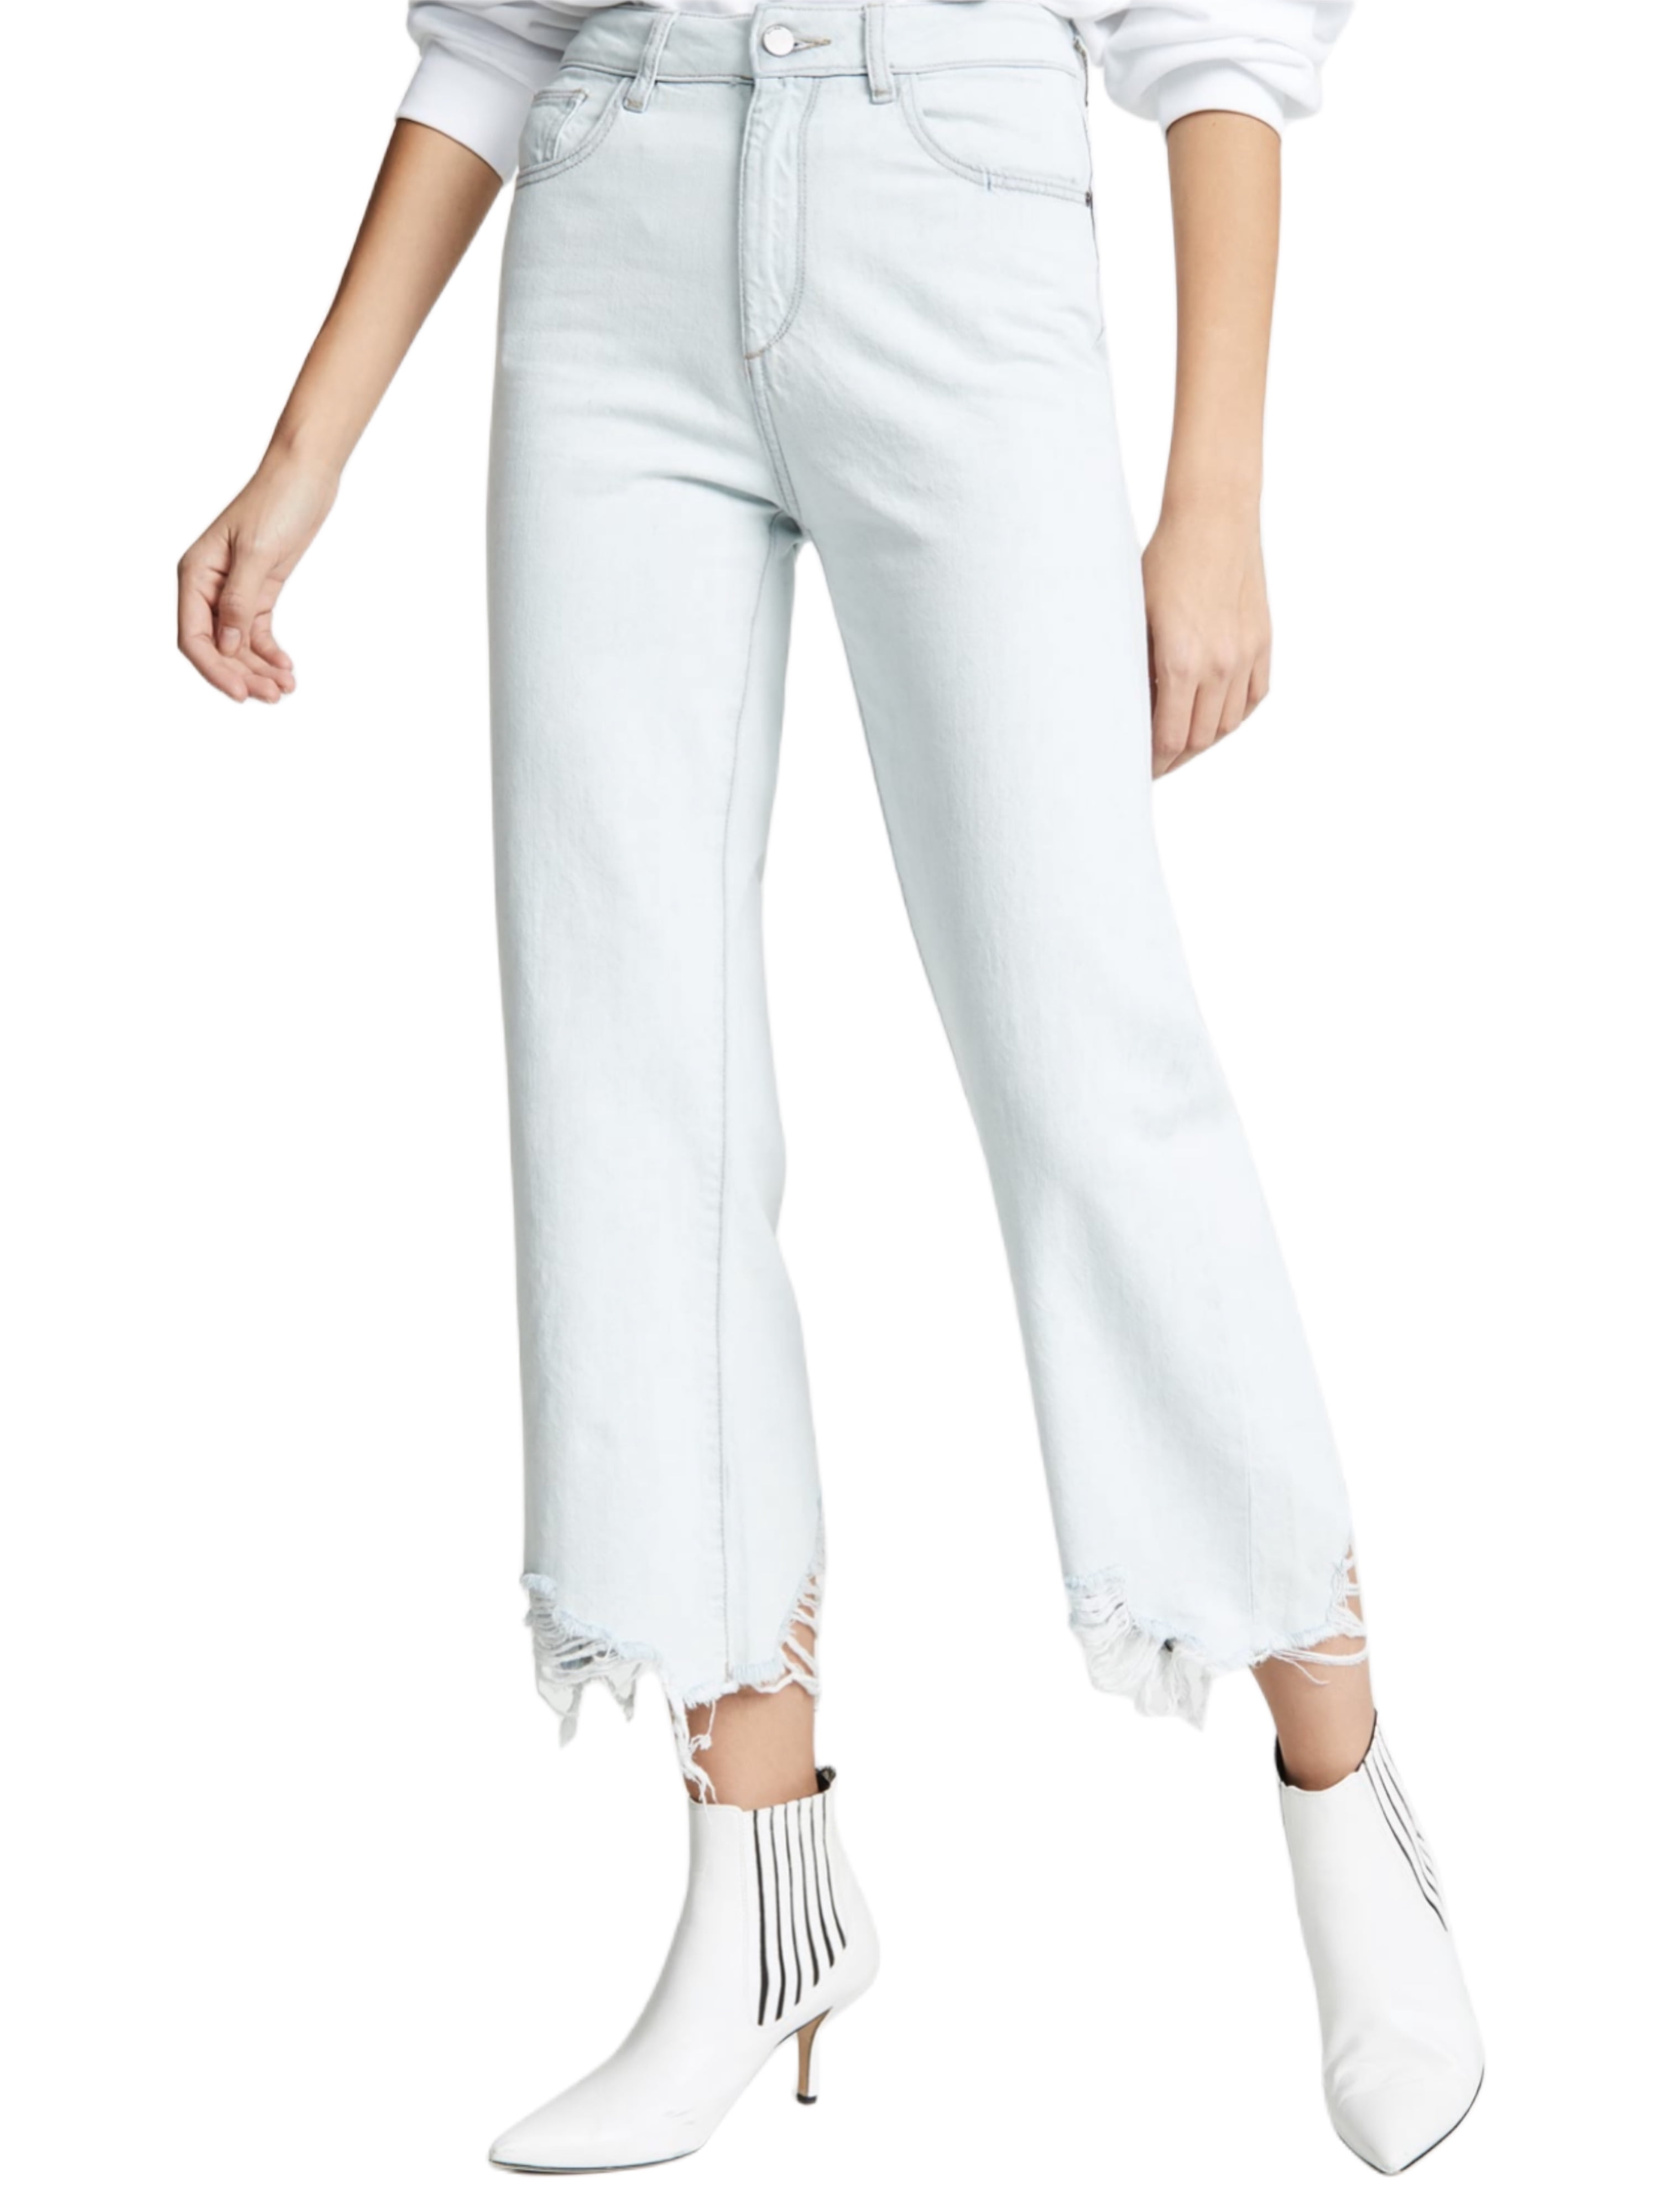 DL1961 Women's Hepburn High Rise Wide Leg Jeans, Palermo, 27 - Walmart.com